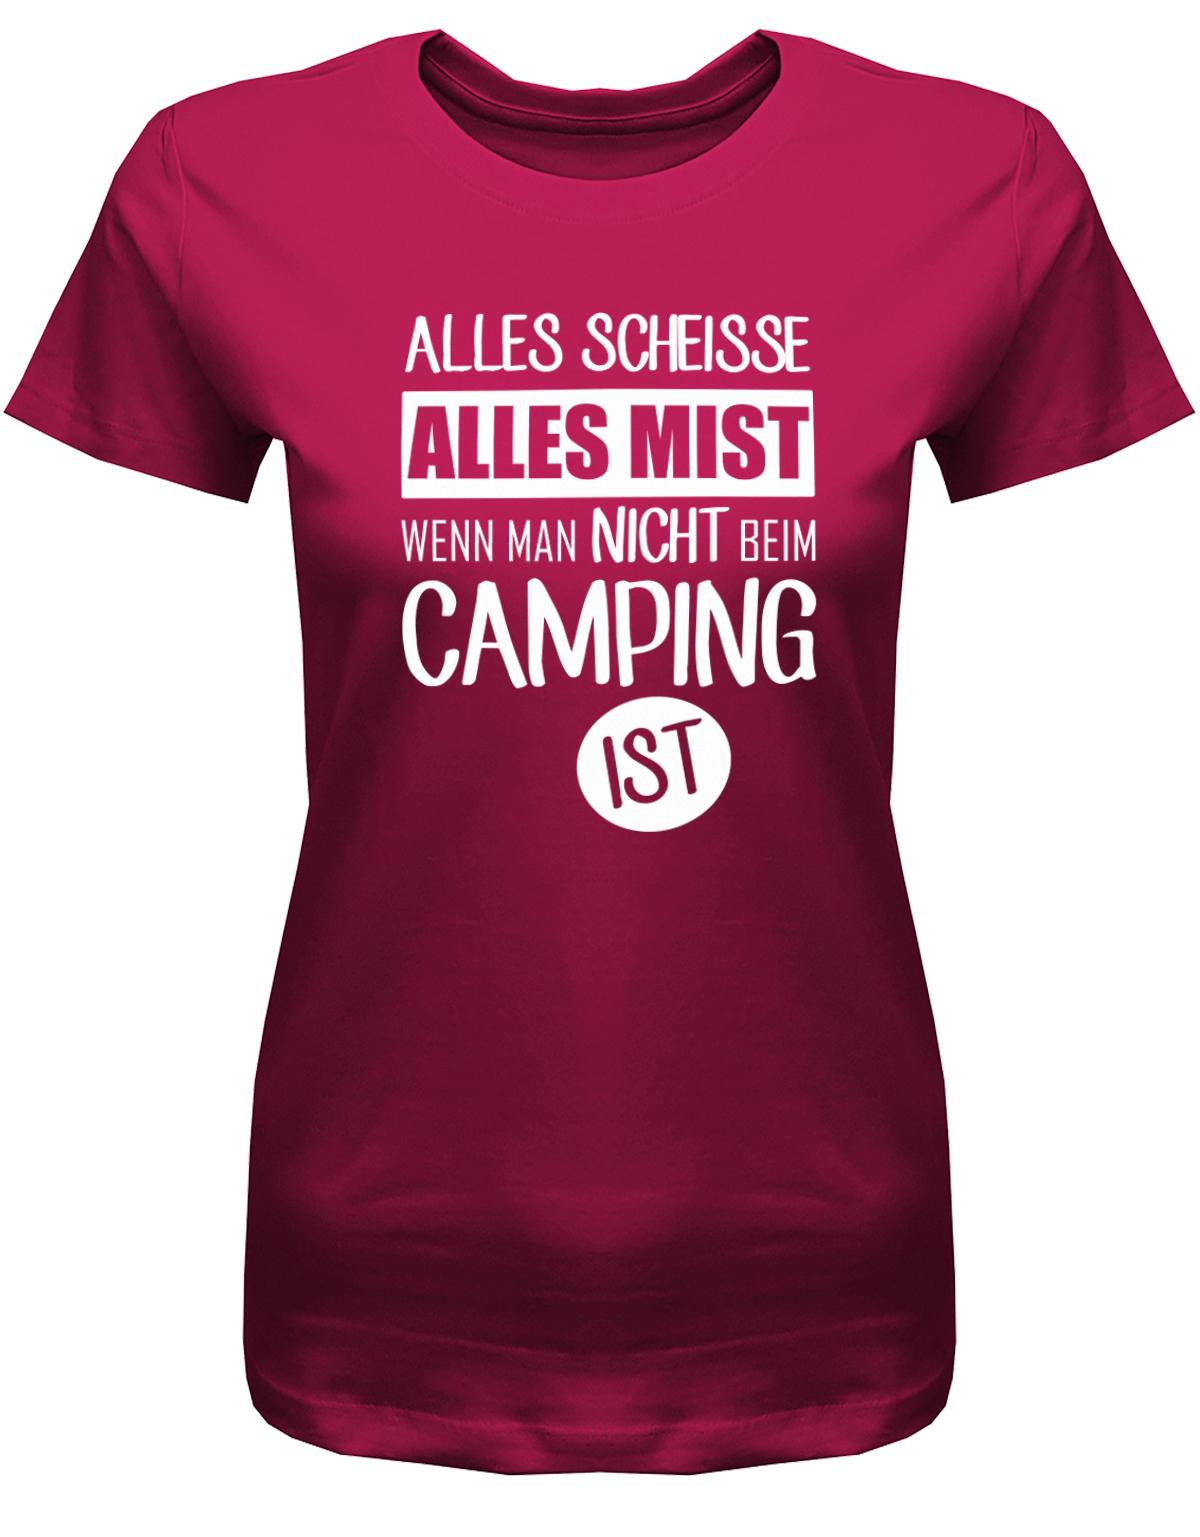 Alles-SCheisse-alles-Mist-wenn-man-nicht-bei-Camping-ist-Damen-Shirt-Sorbet6NQknehelxQwc